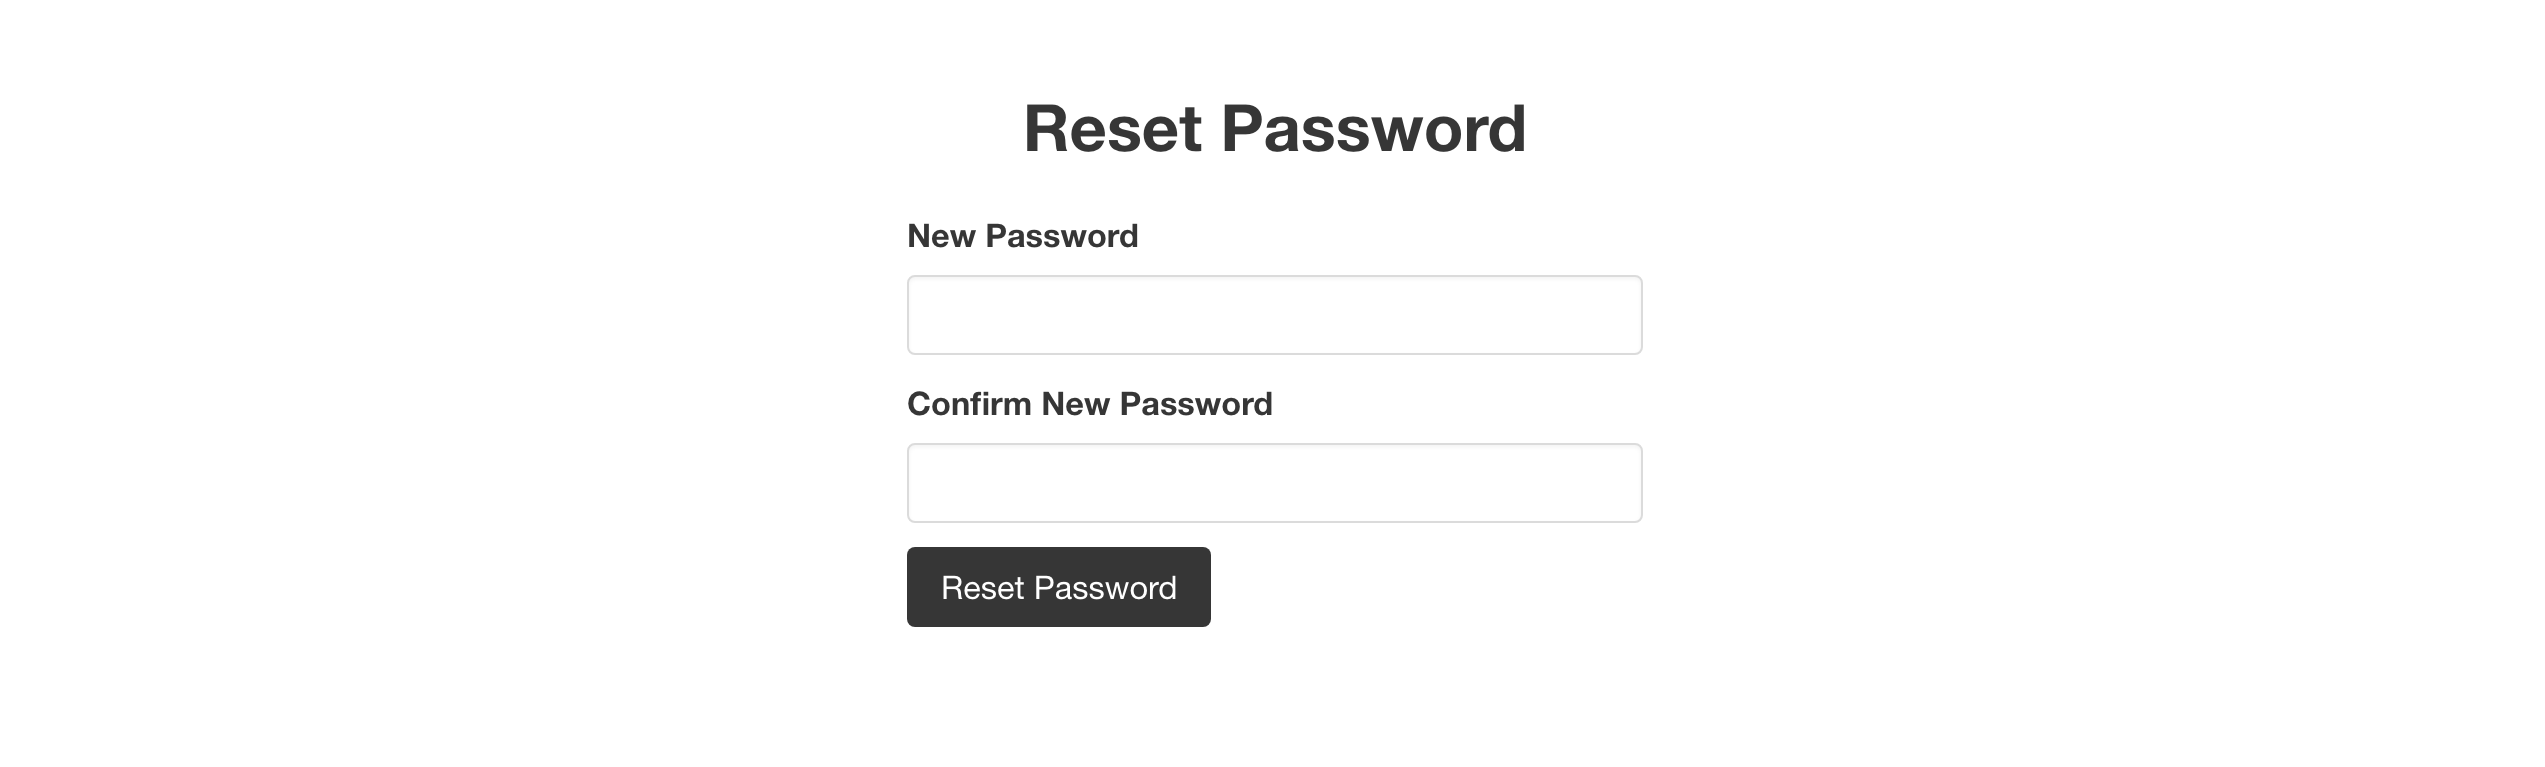 Strapi Reset Password Form